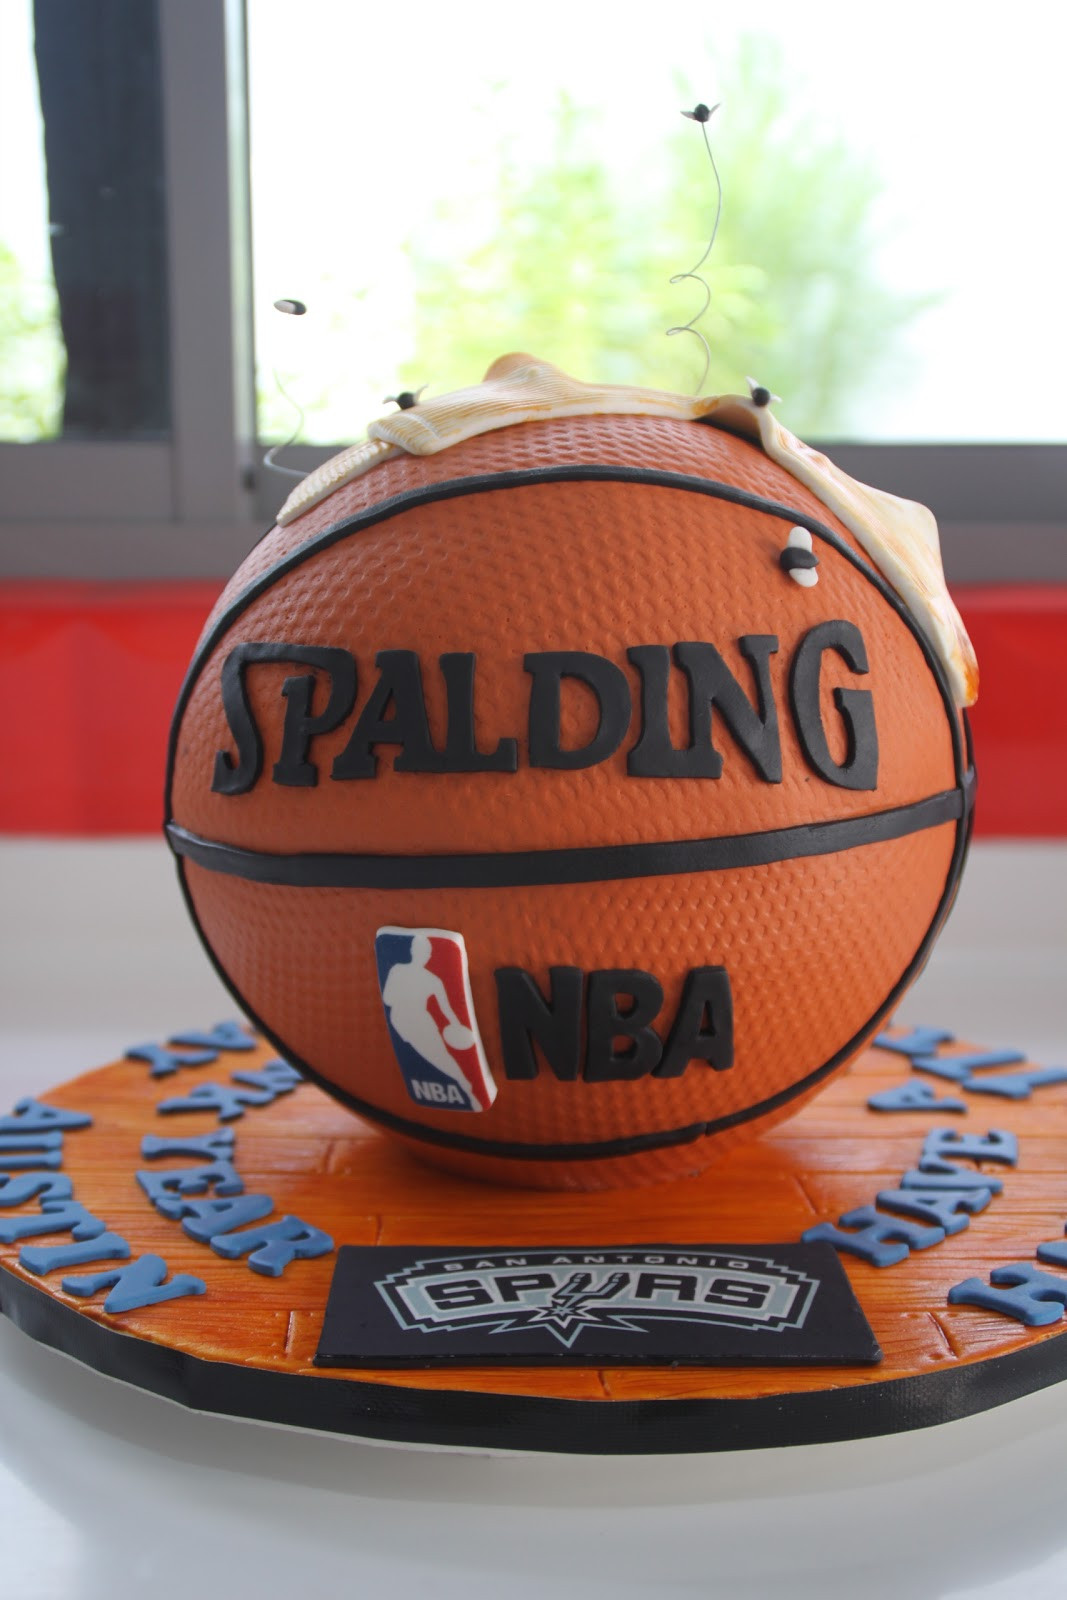 Basketball Birthday Cake
 Sculpted Basketball Cake with Socks